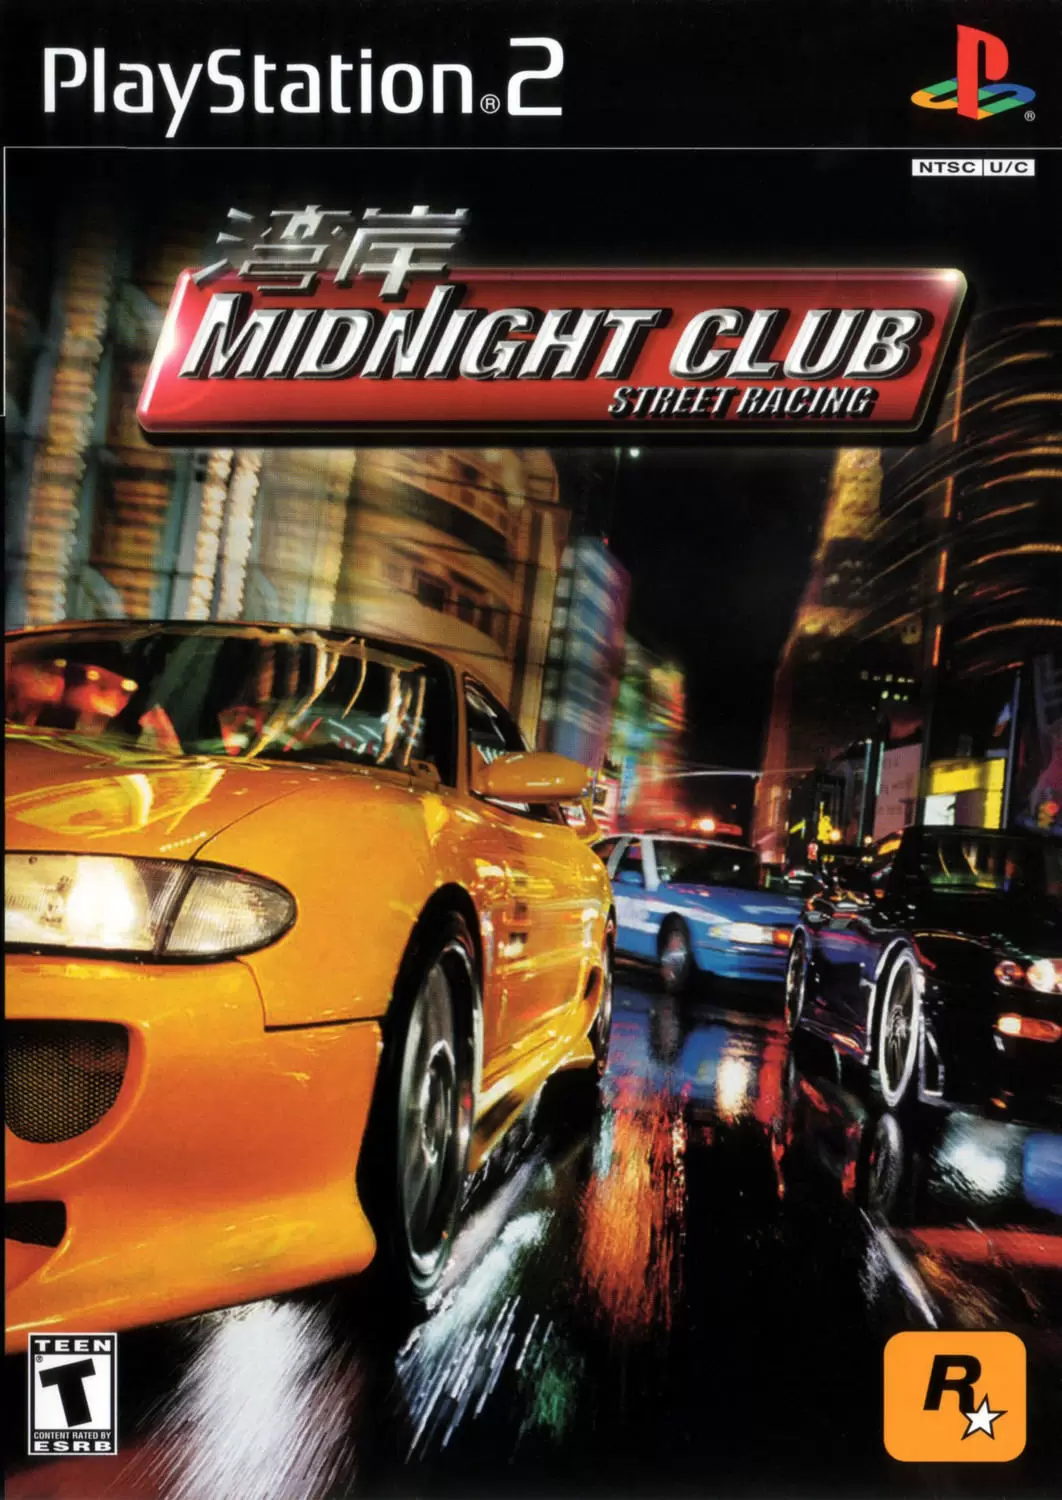 PS2 Games - Midnight Club: Street Racing